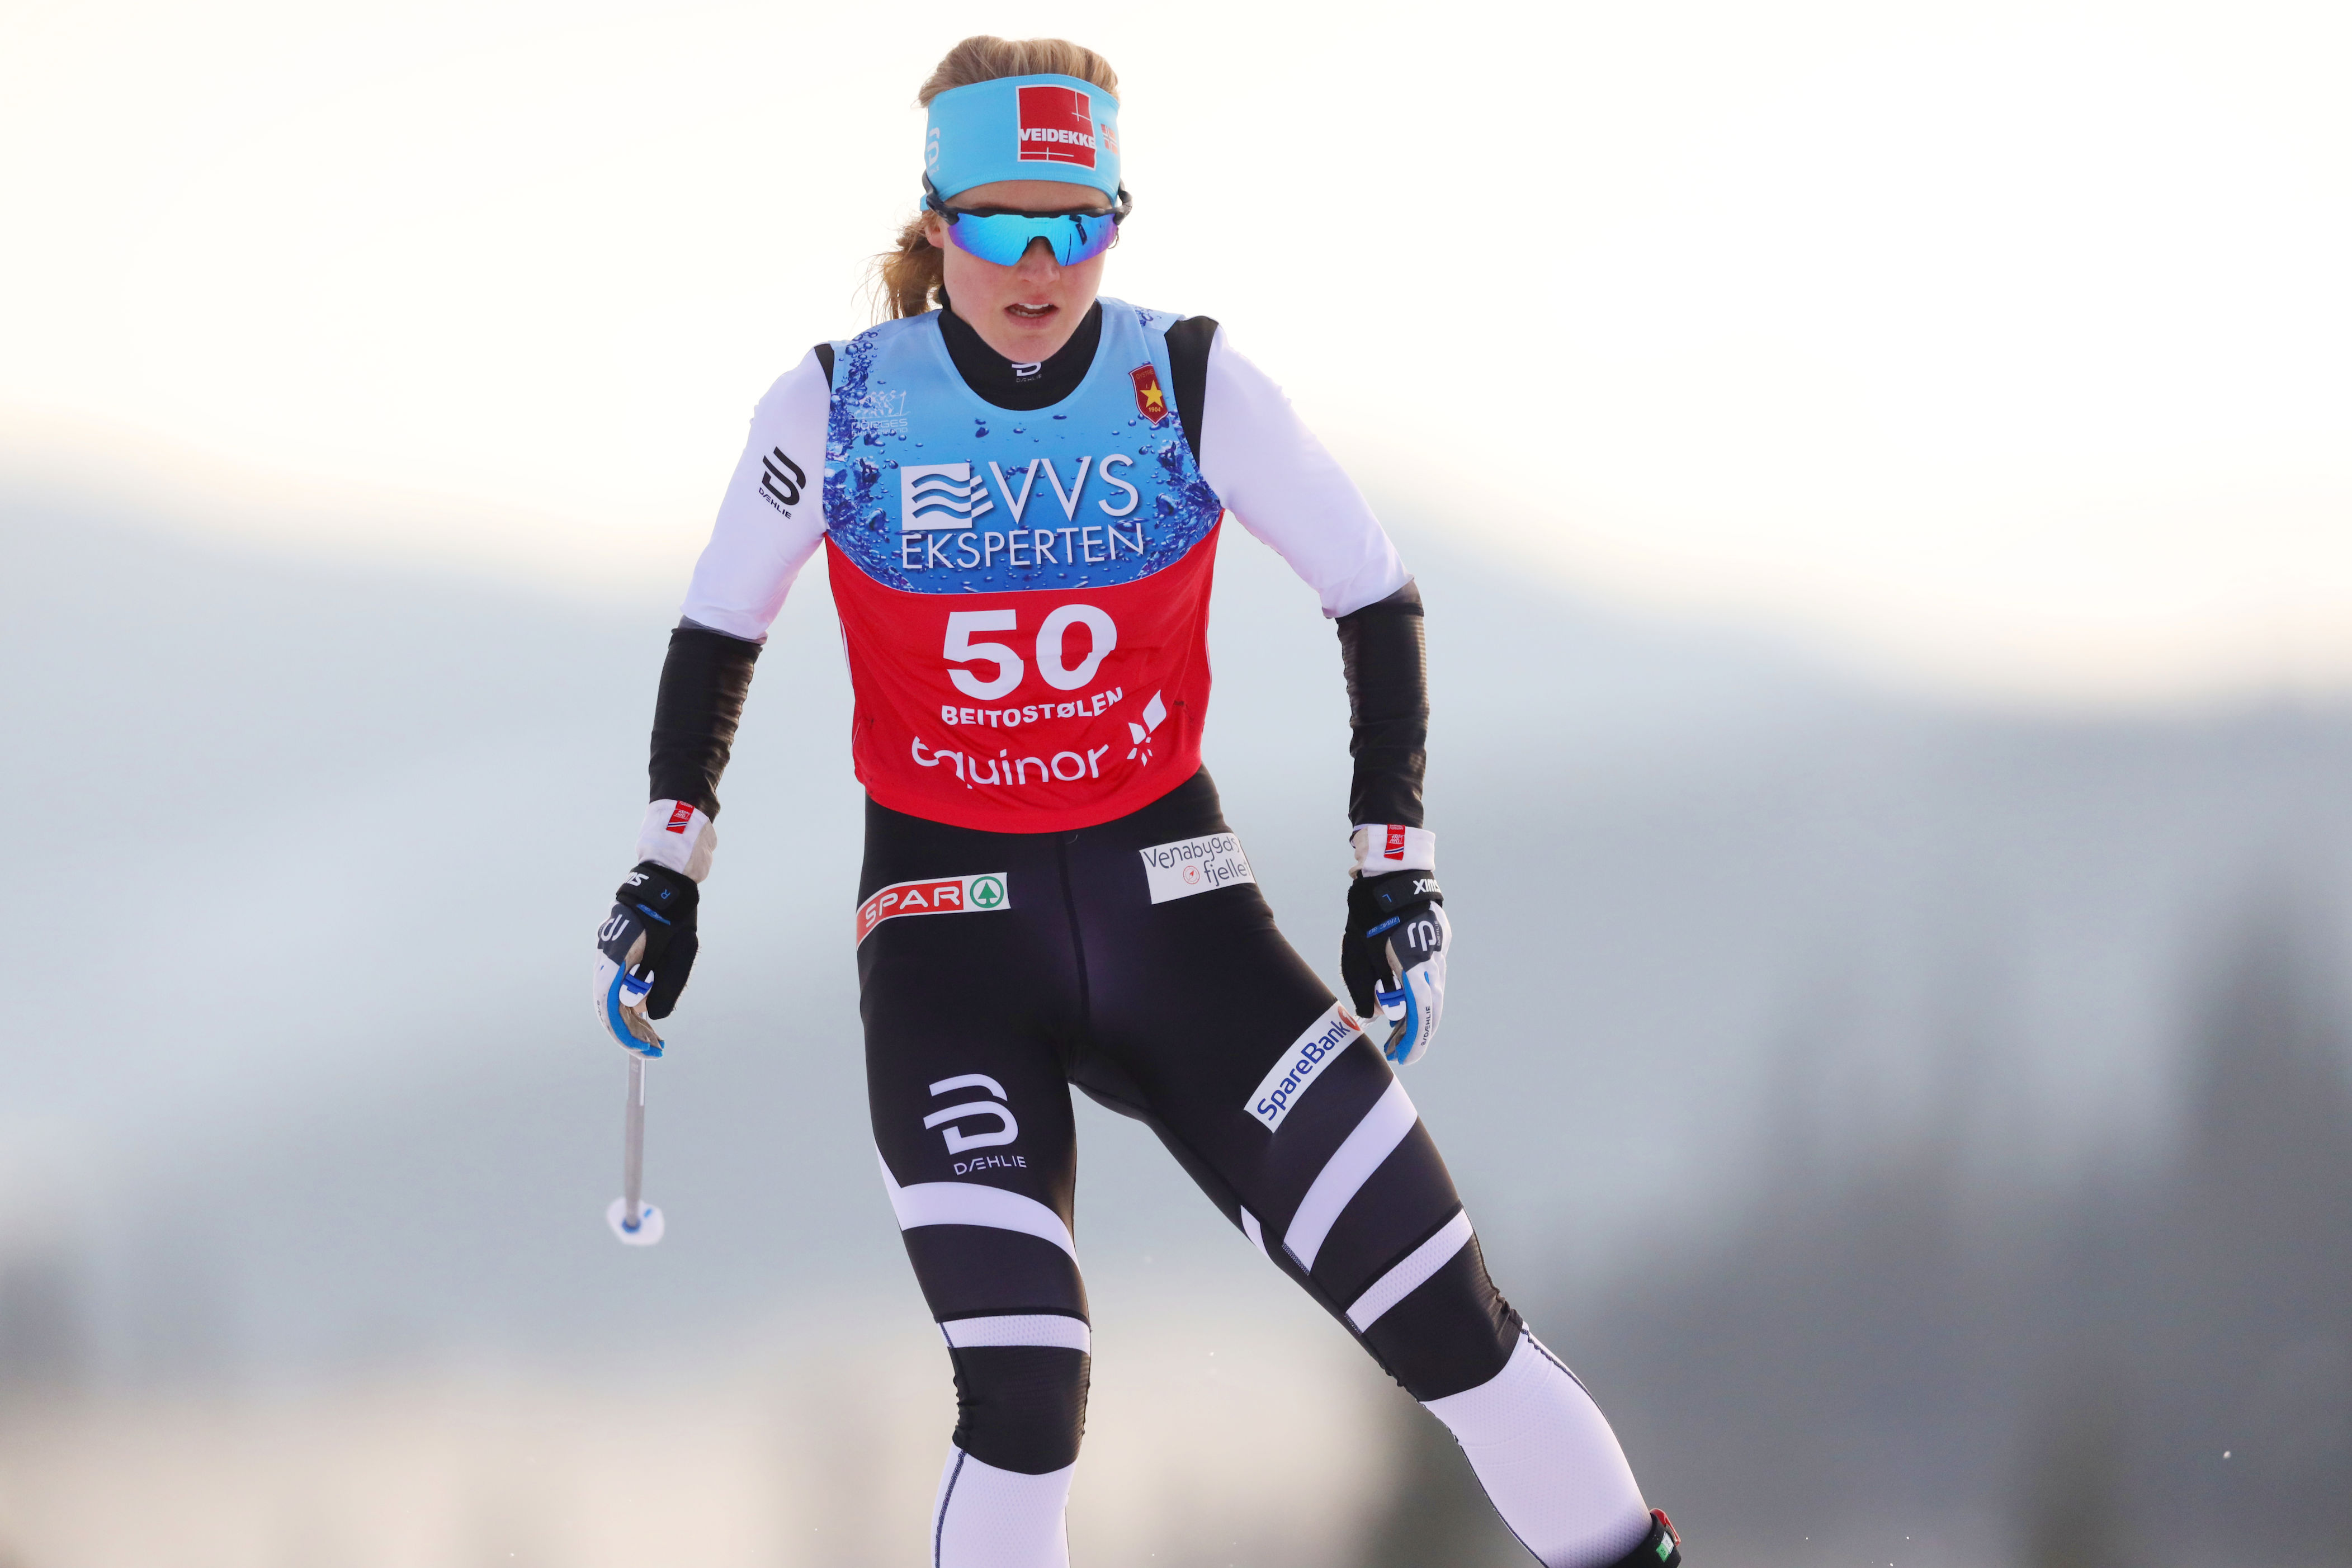 fleten vant ski classic-løp etter soloraid